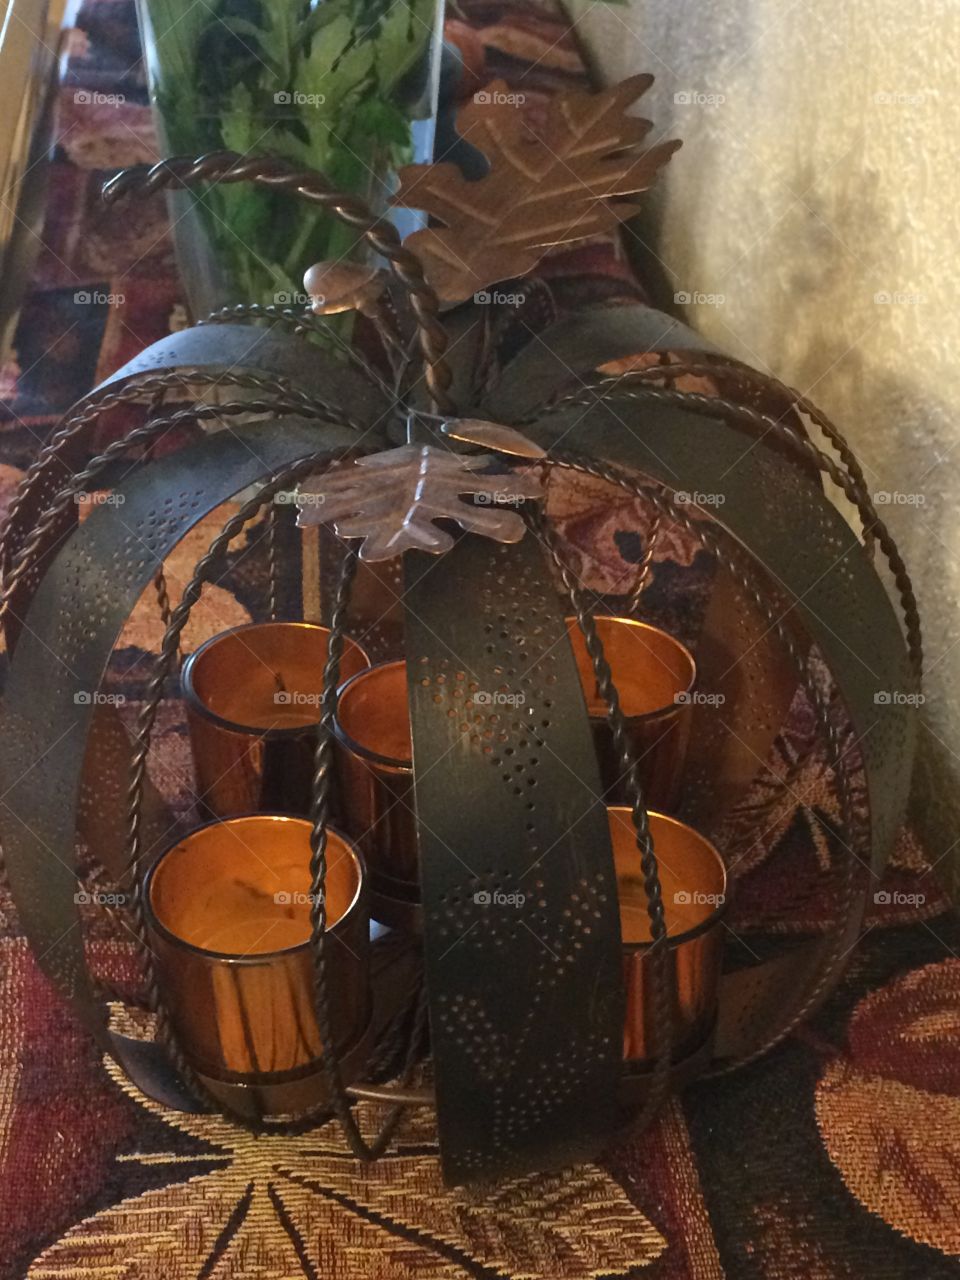 A pumpkin tea light holder with leaf motifs and orange color theme. Taken in low light. 